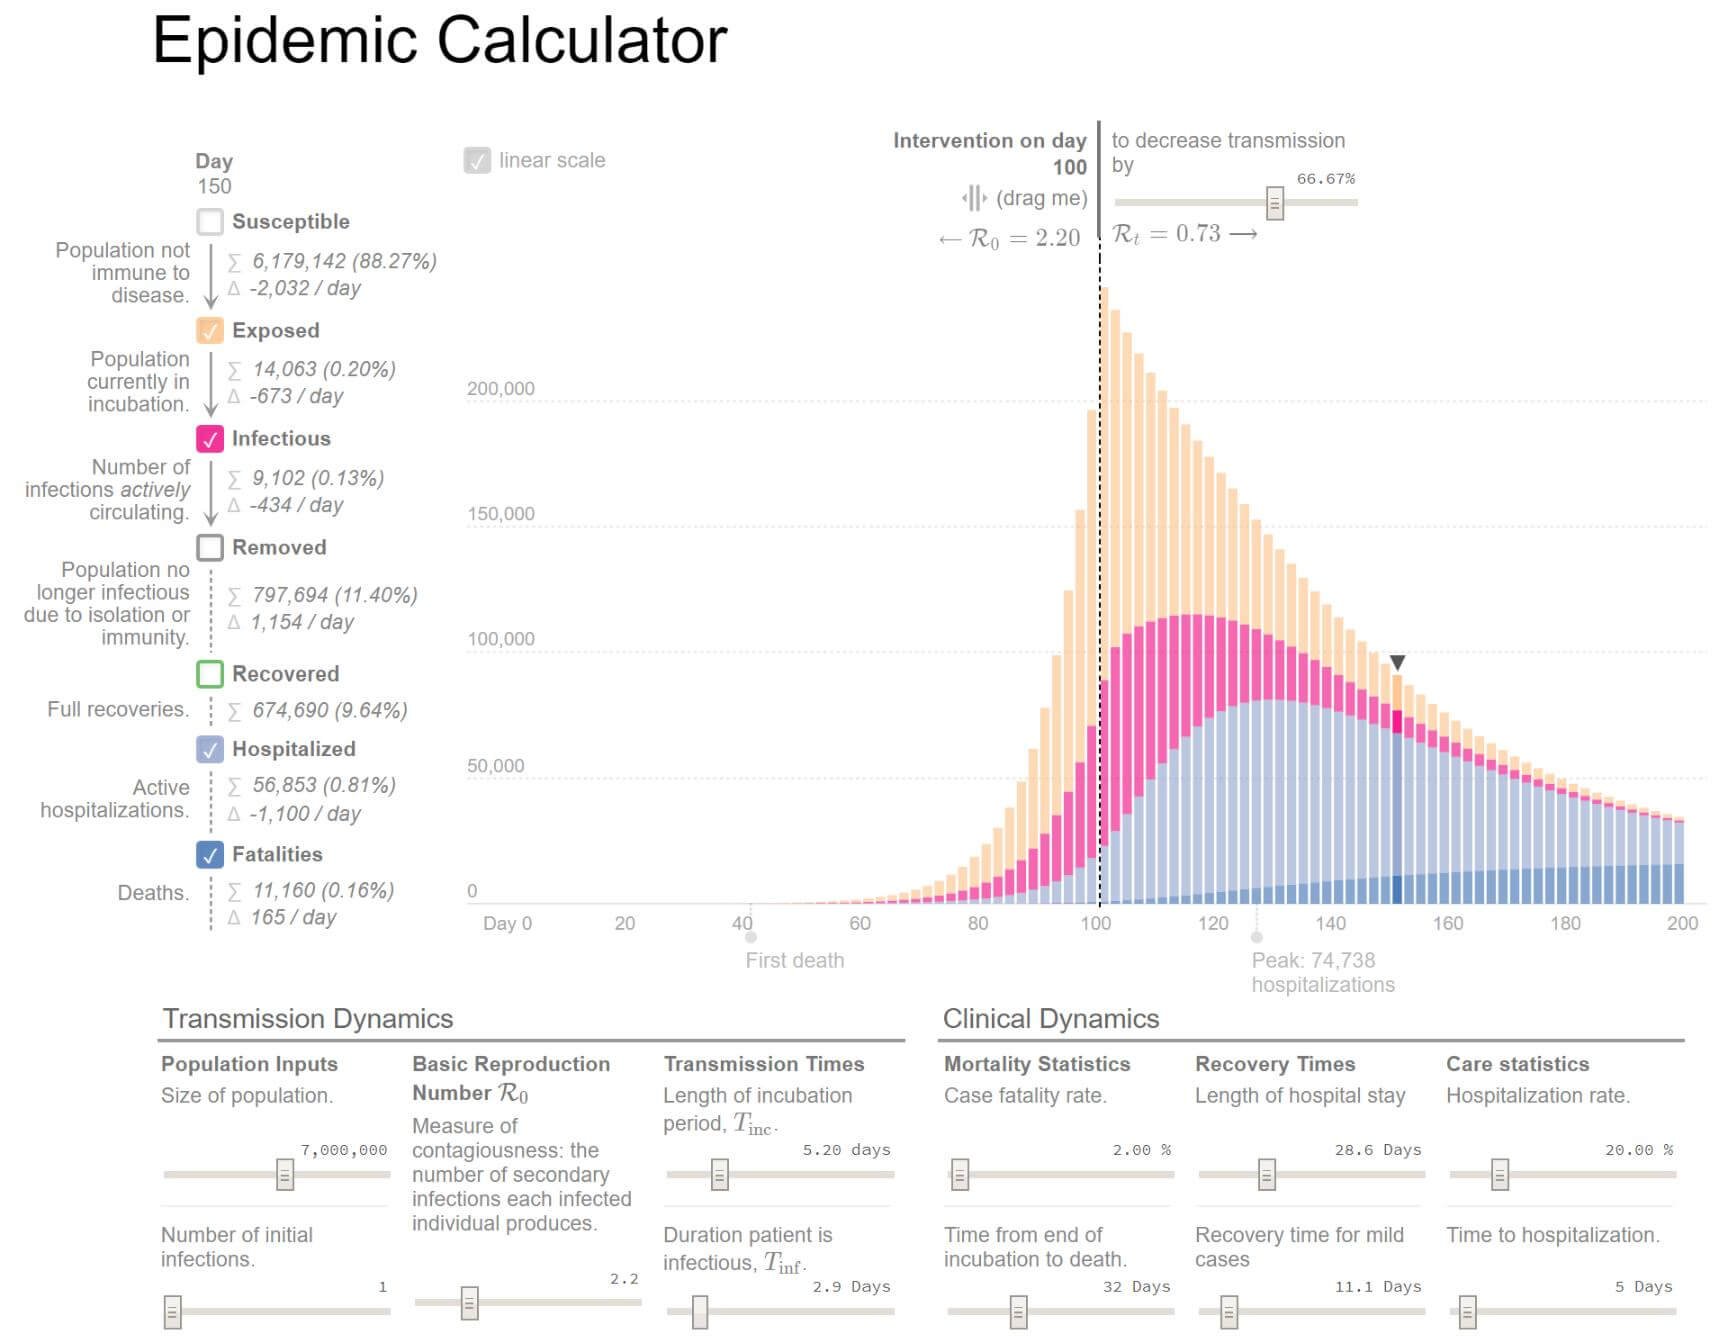 Epidemic calculator graph and formulas